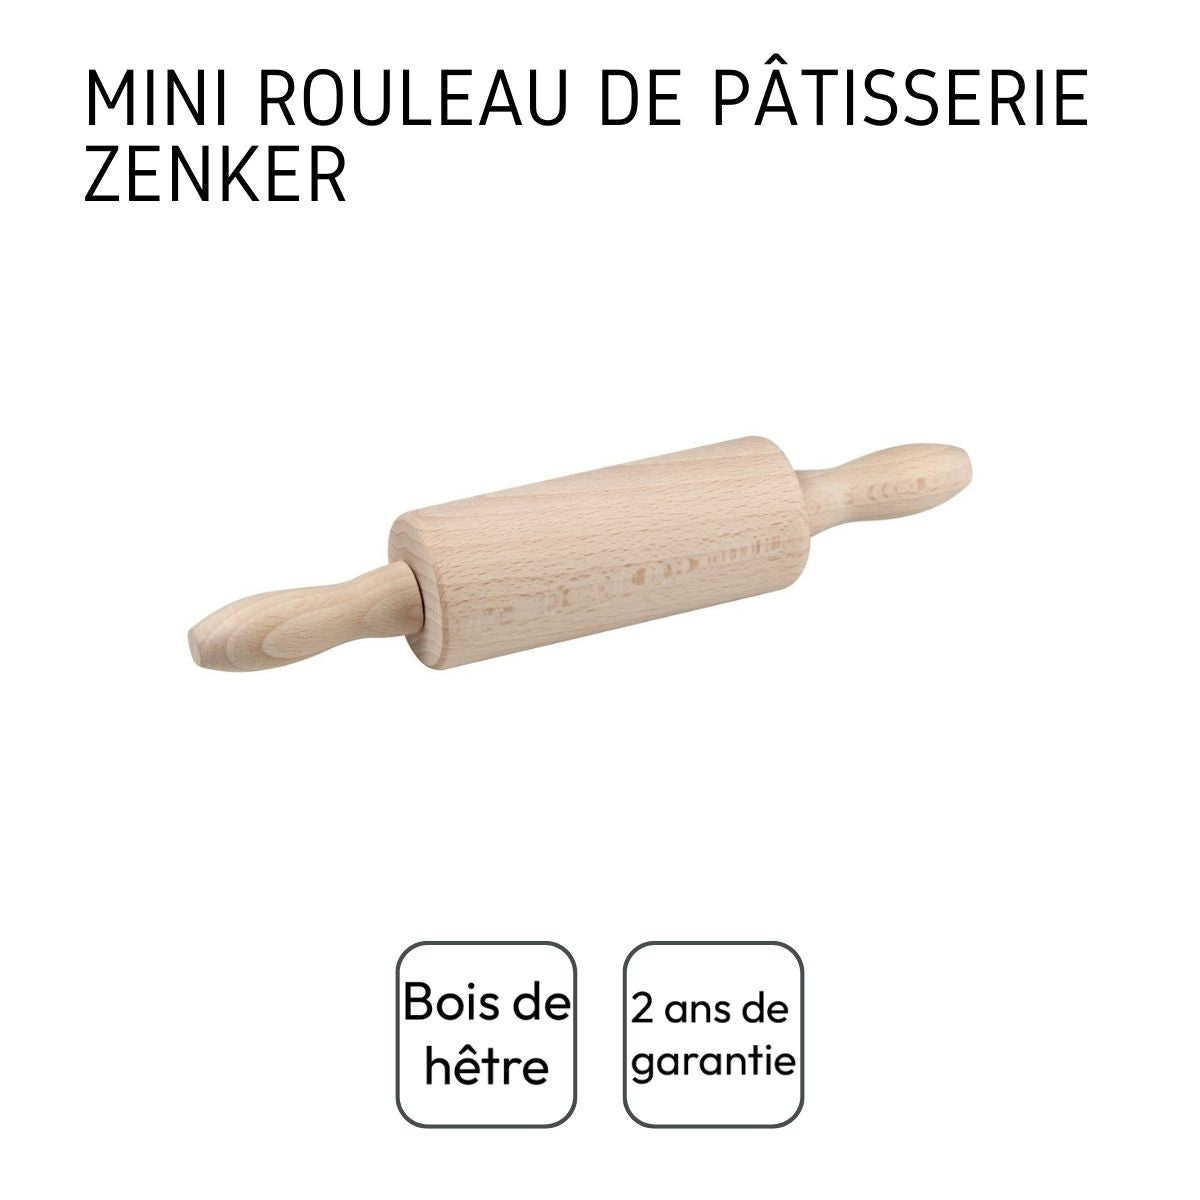 Mini rouleau à pâtisserie en bois Zenker